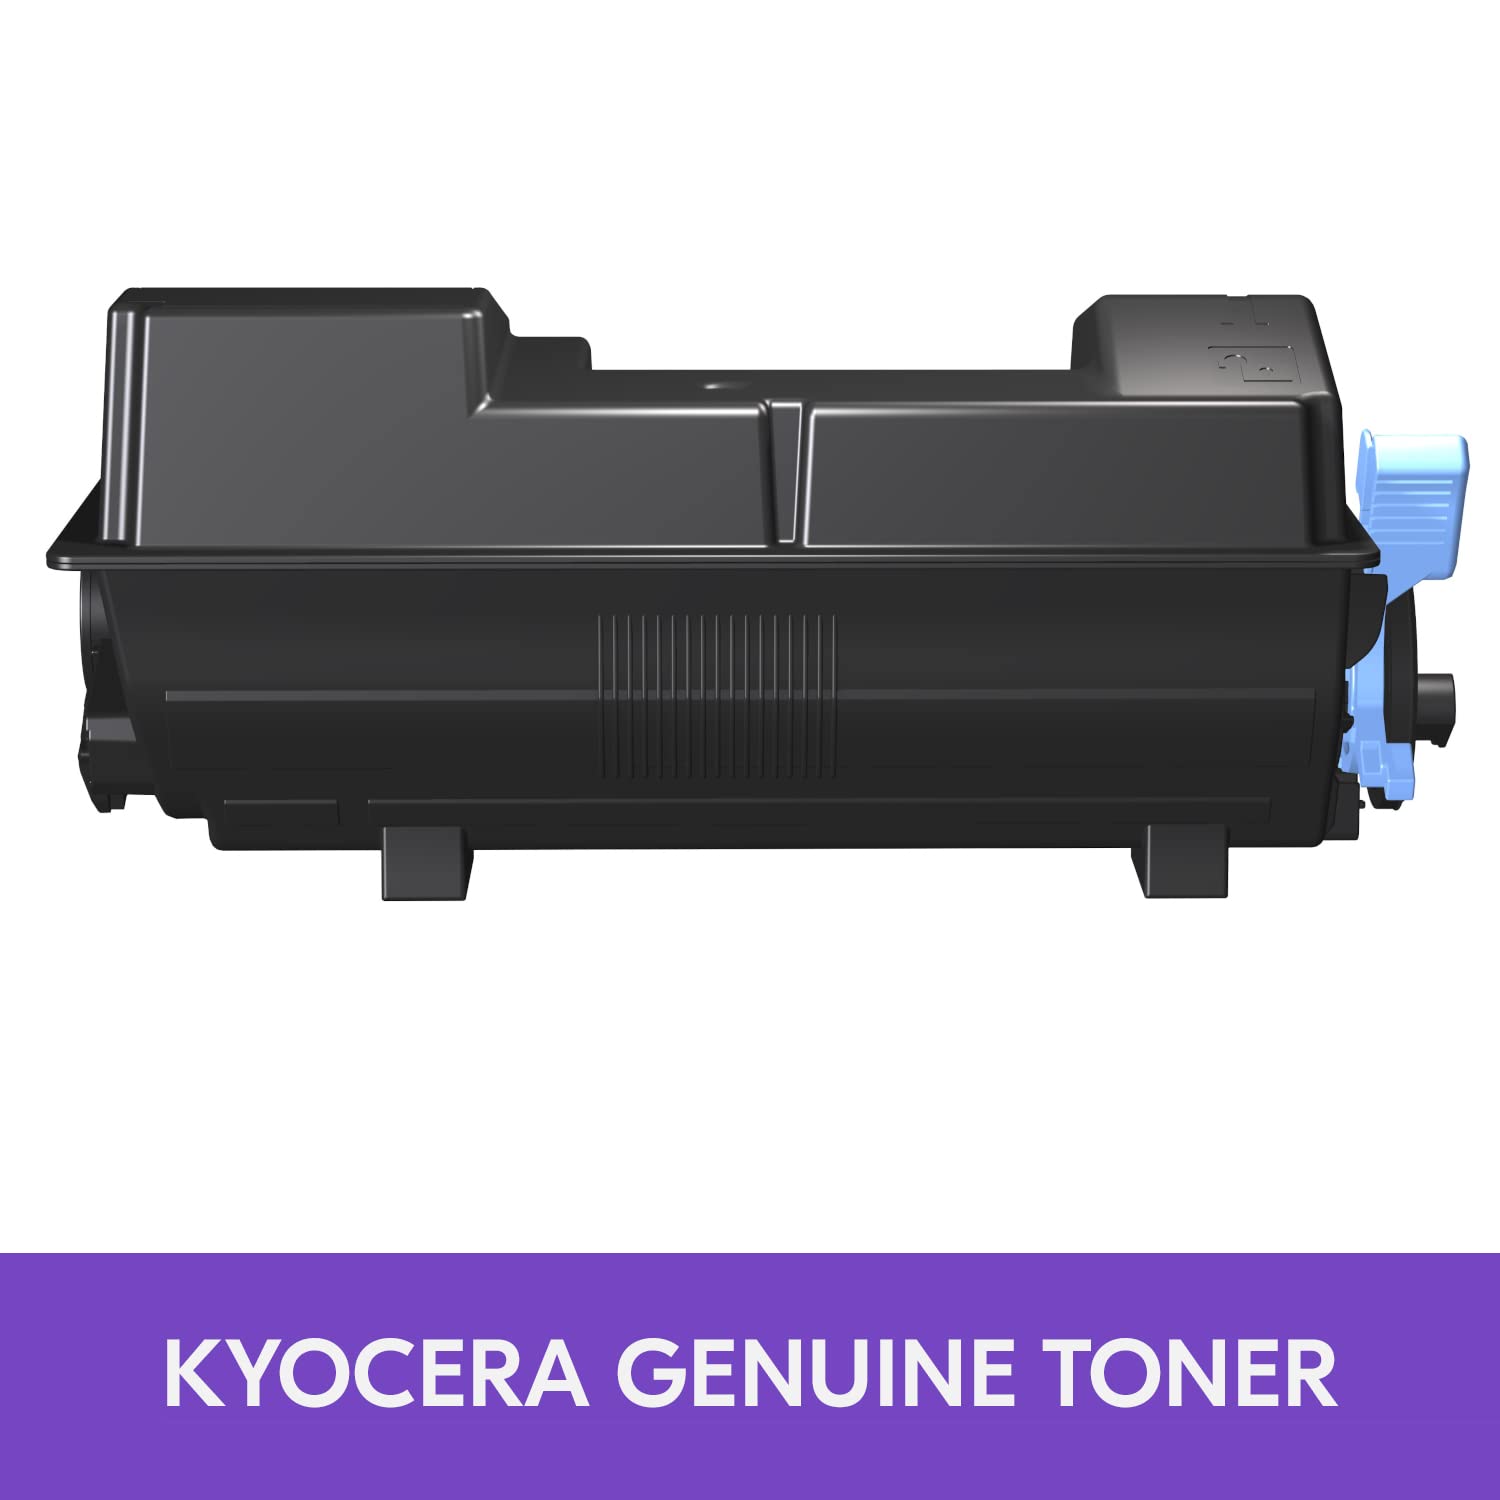 Kyocera Genuine TK-3432 Black Toner Cartridge for ECOSYS PA5500x and MA5500ifx Model Laser Printers (1T0C0W0US0)